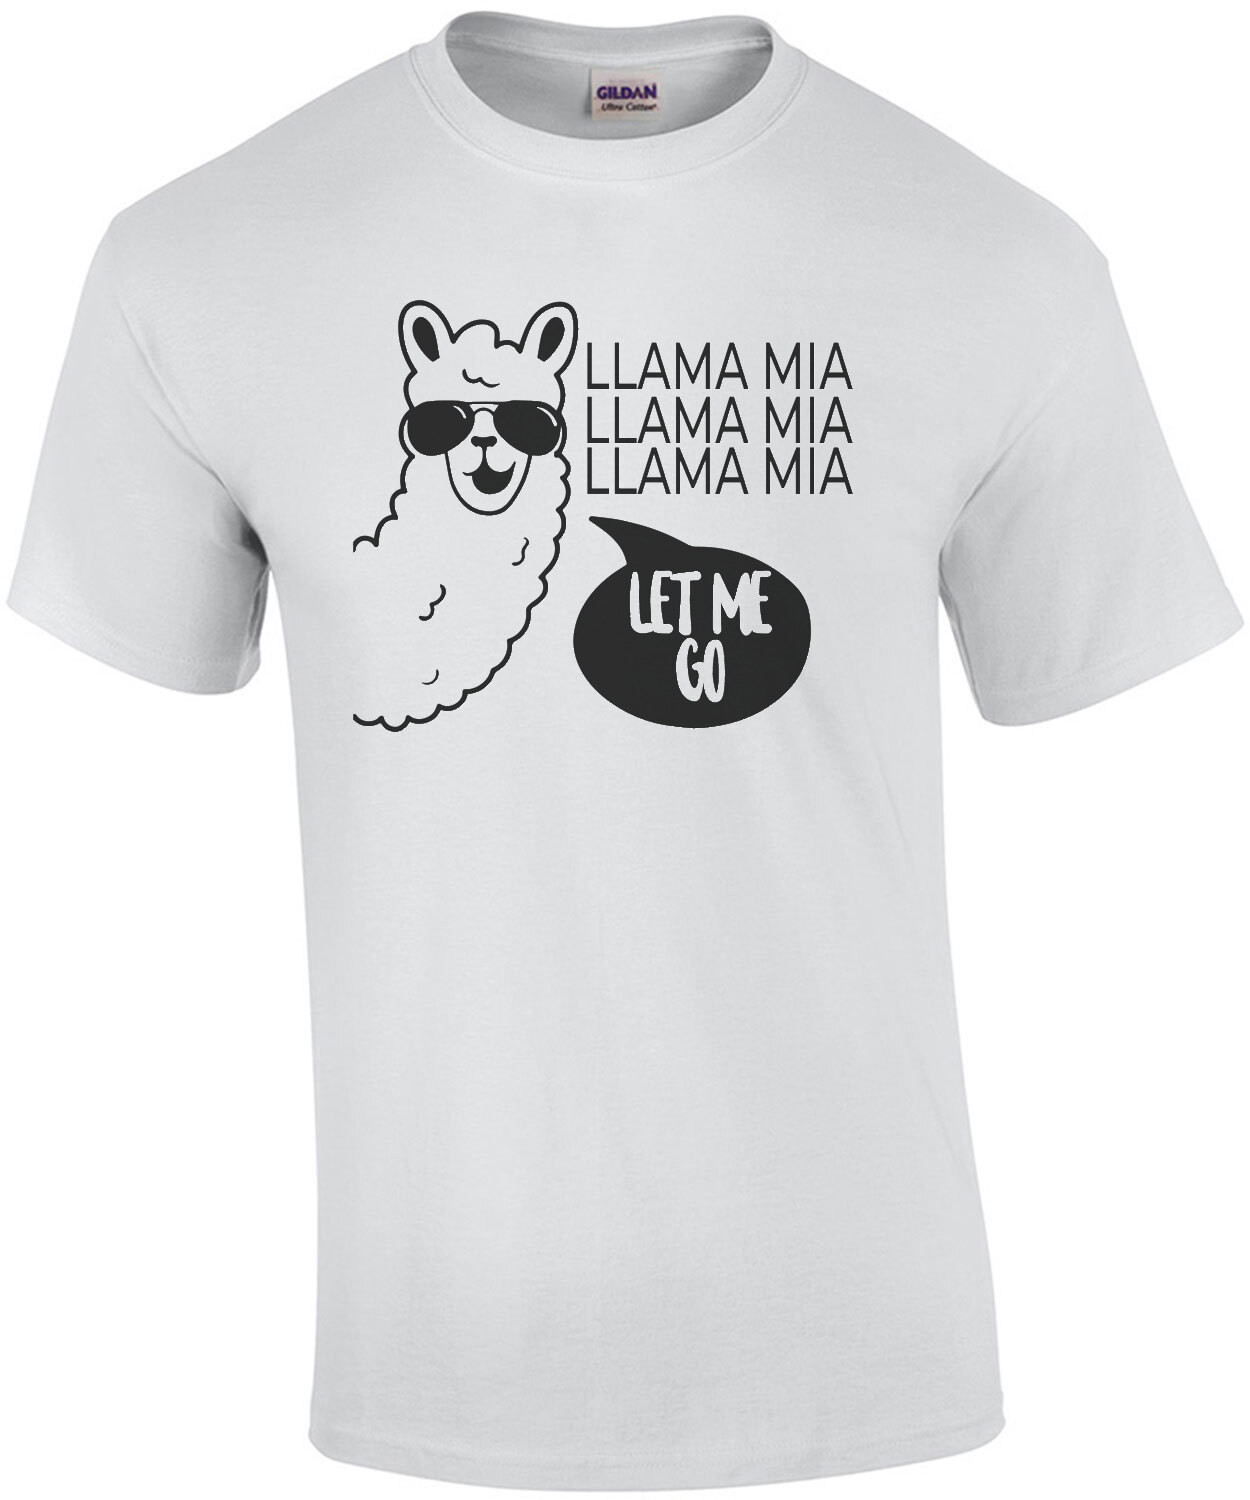 Llama Mia Llama Mia Llama Mia  Let me go - funny queen bohemian rhapsody parody t-shirt